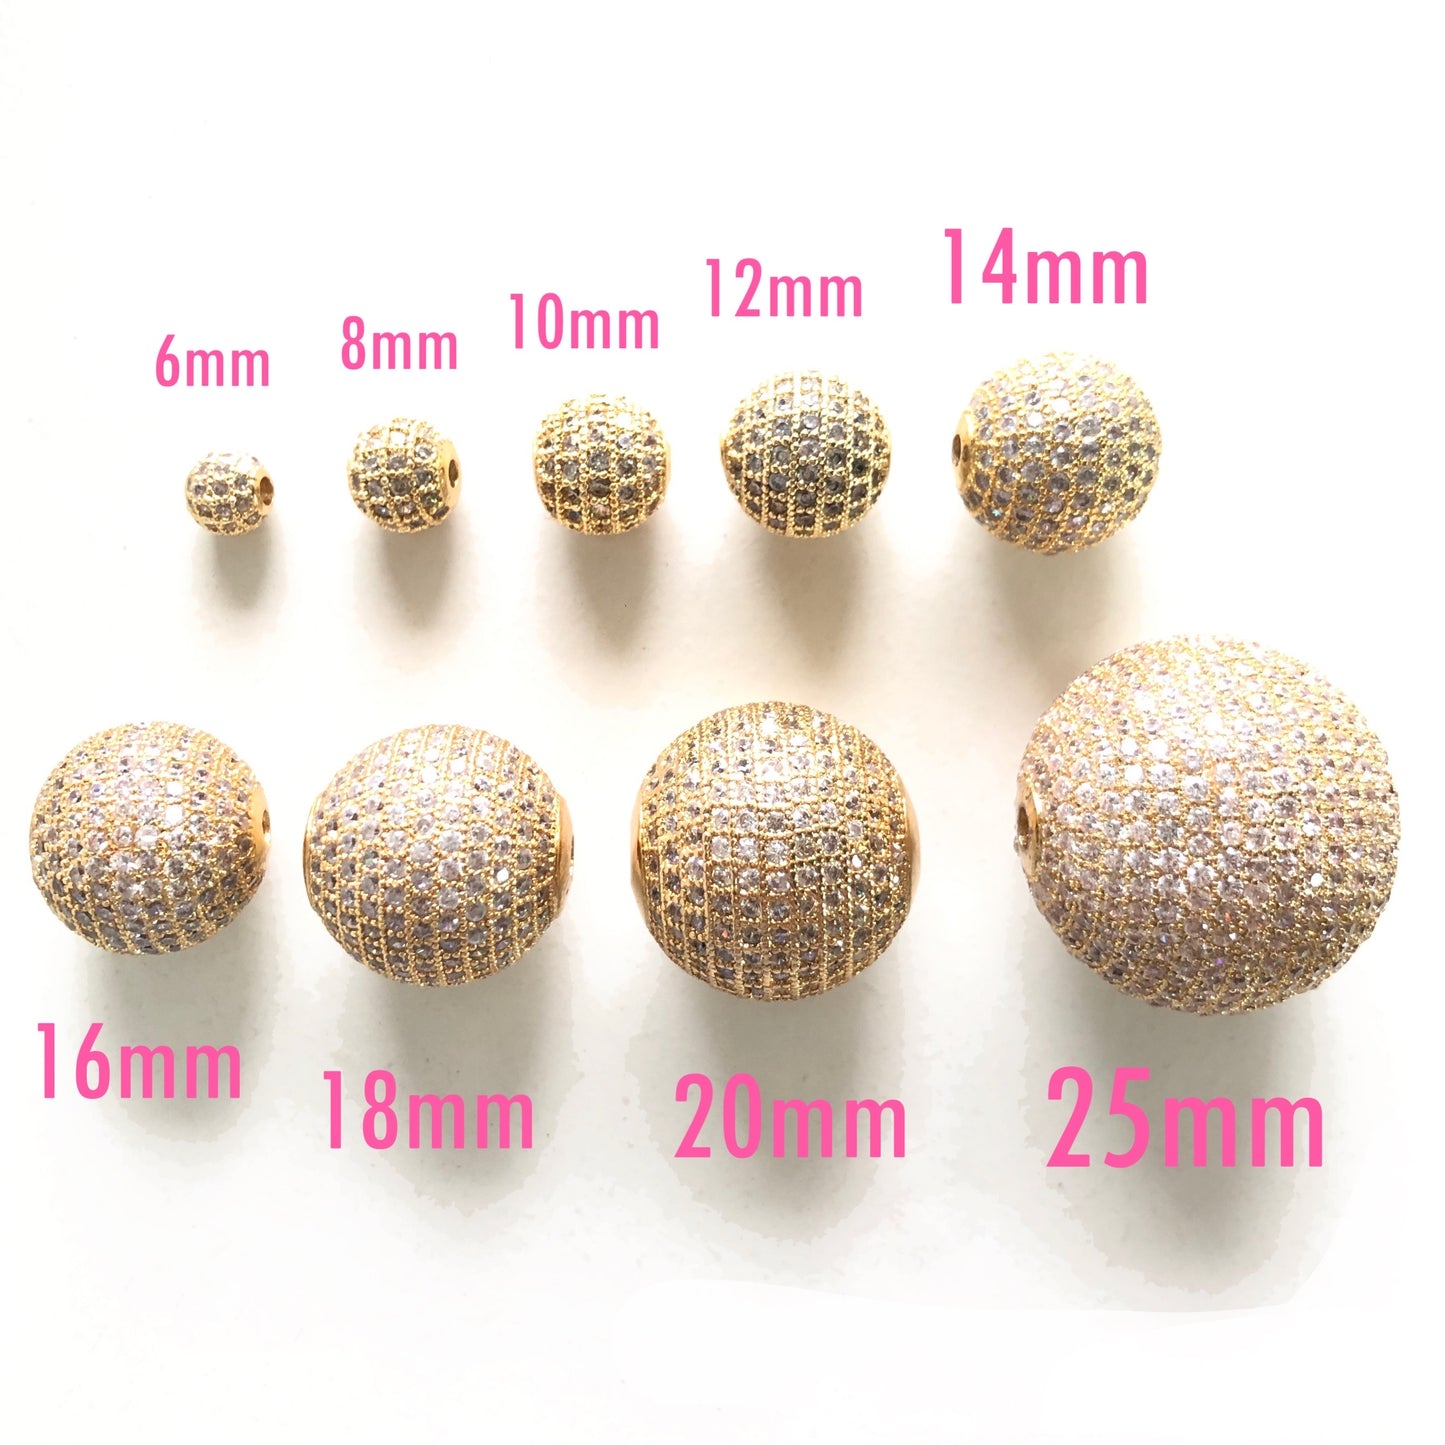 10pcs/lot 6 /8 /10 /12 /14 /16 /18 /20 /25mm Clear CZ Paved Round Ball Beads Spacers CZ Paved Spacers 10mm Beads 12mm Beads 6mm Beads 8mm Beads Ball Beads Charms Beads Beyond